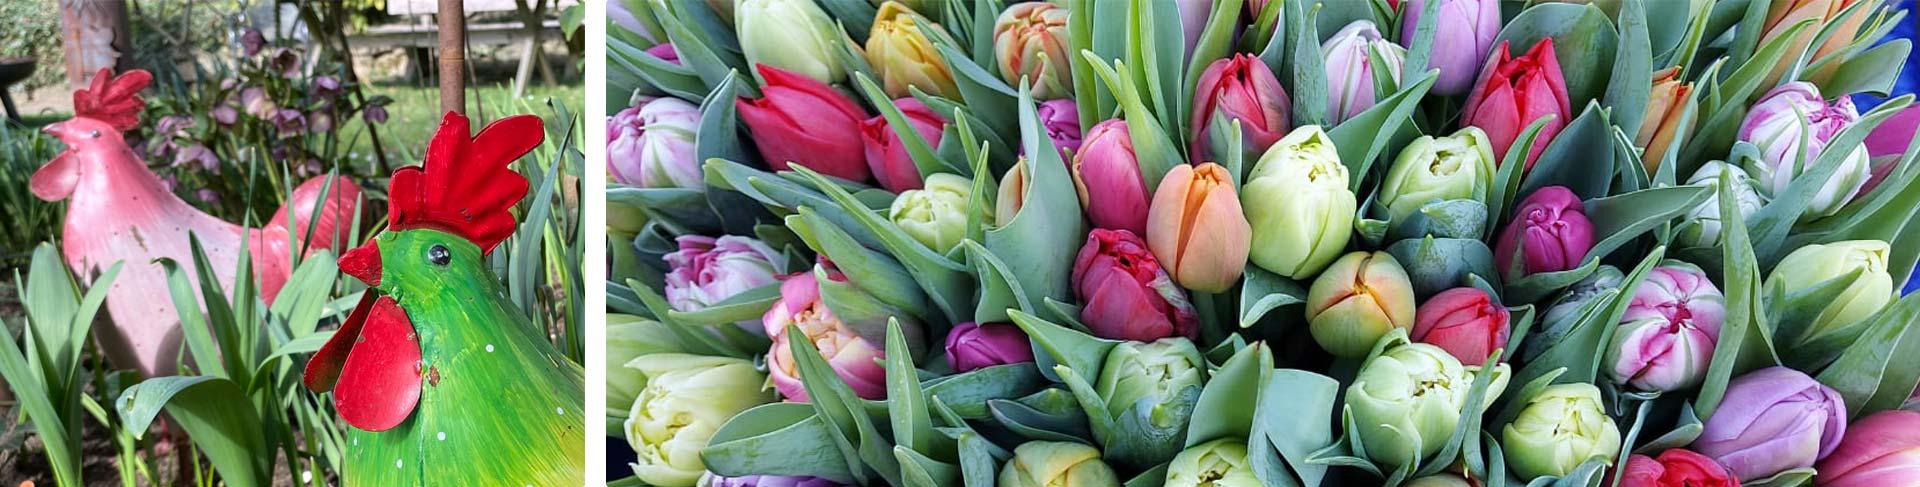 Tulpenbracht und Hahndekoration